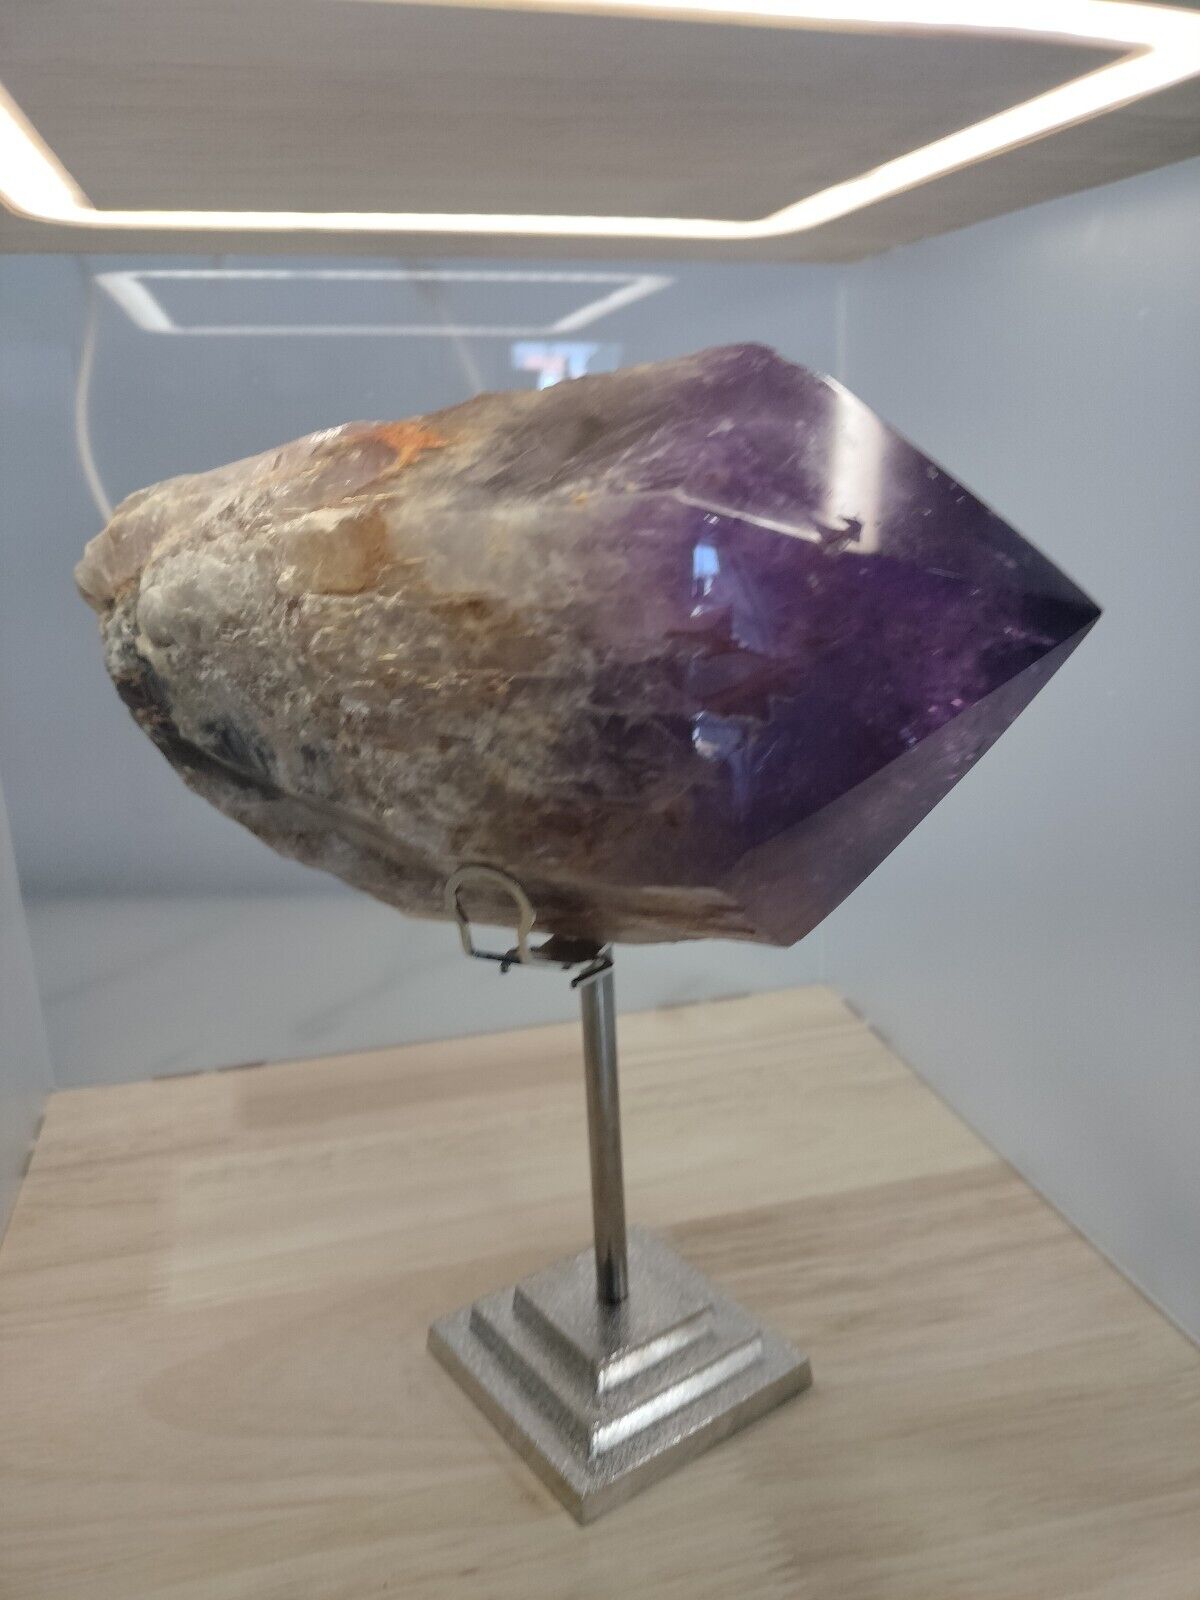 7.27 Lb Large Natural Amethyst Quartz Crystal Point Rough Specimen Healing